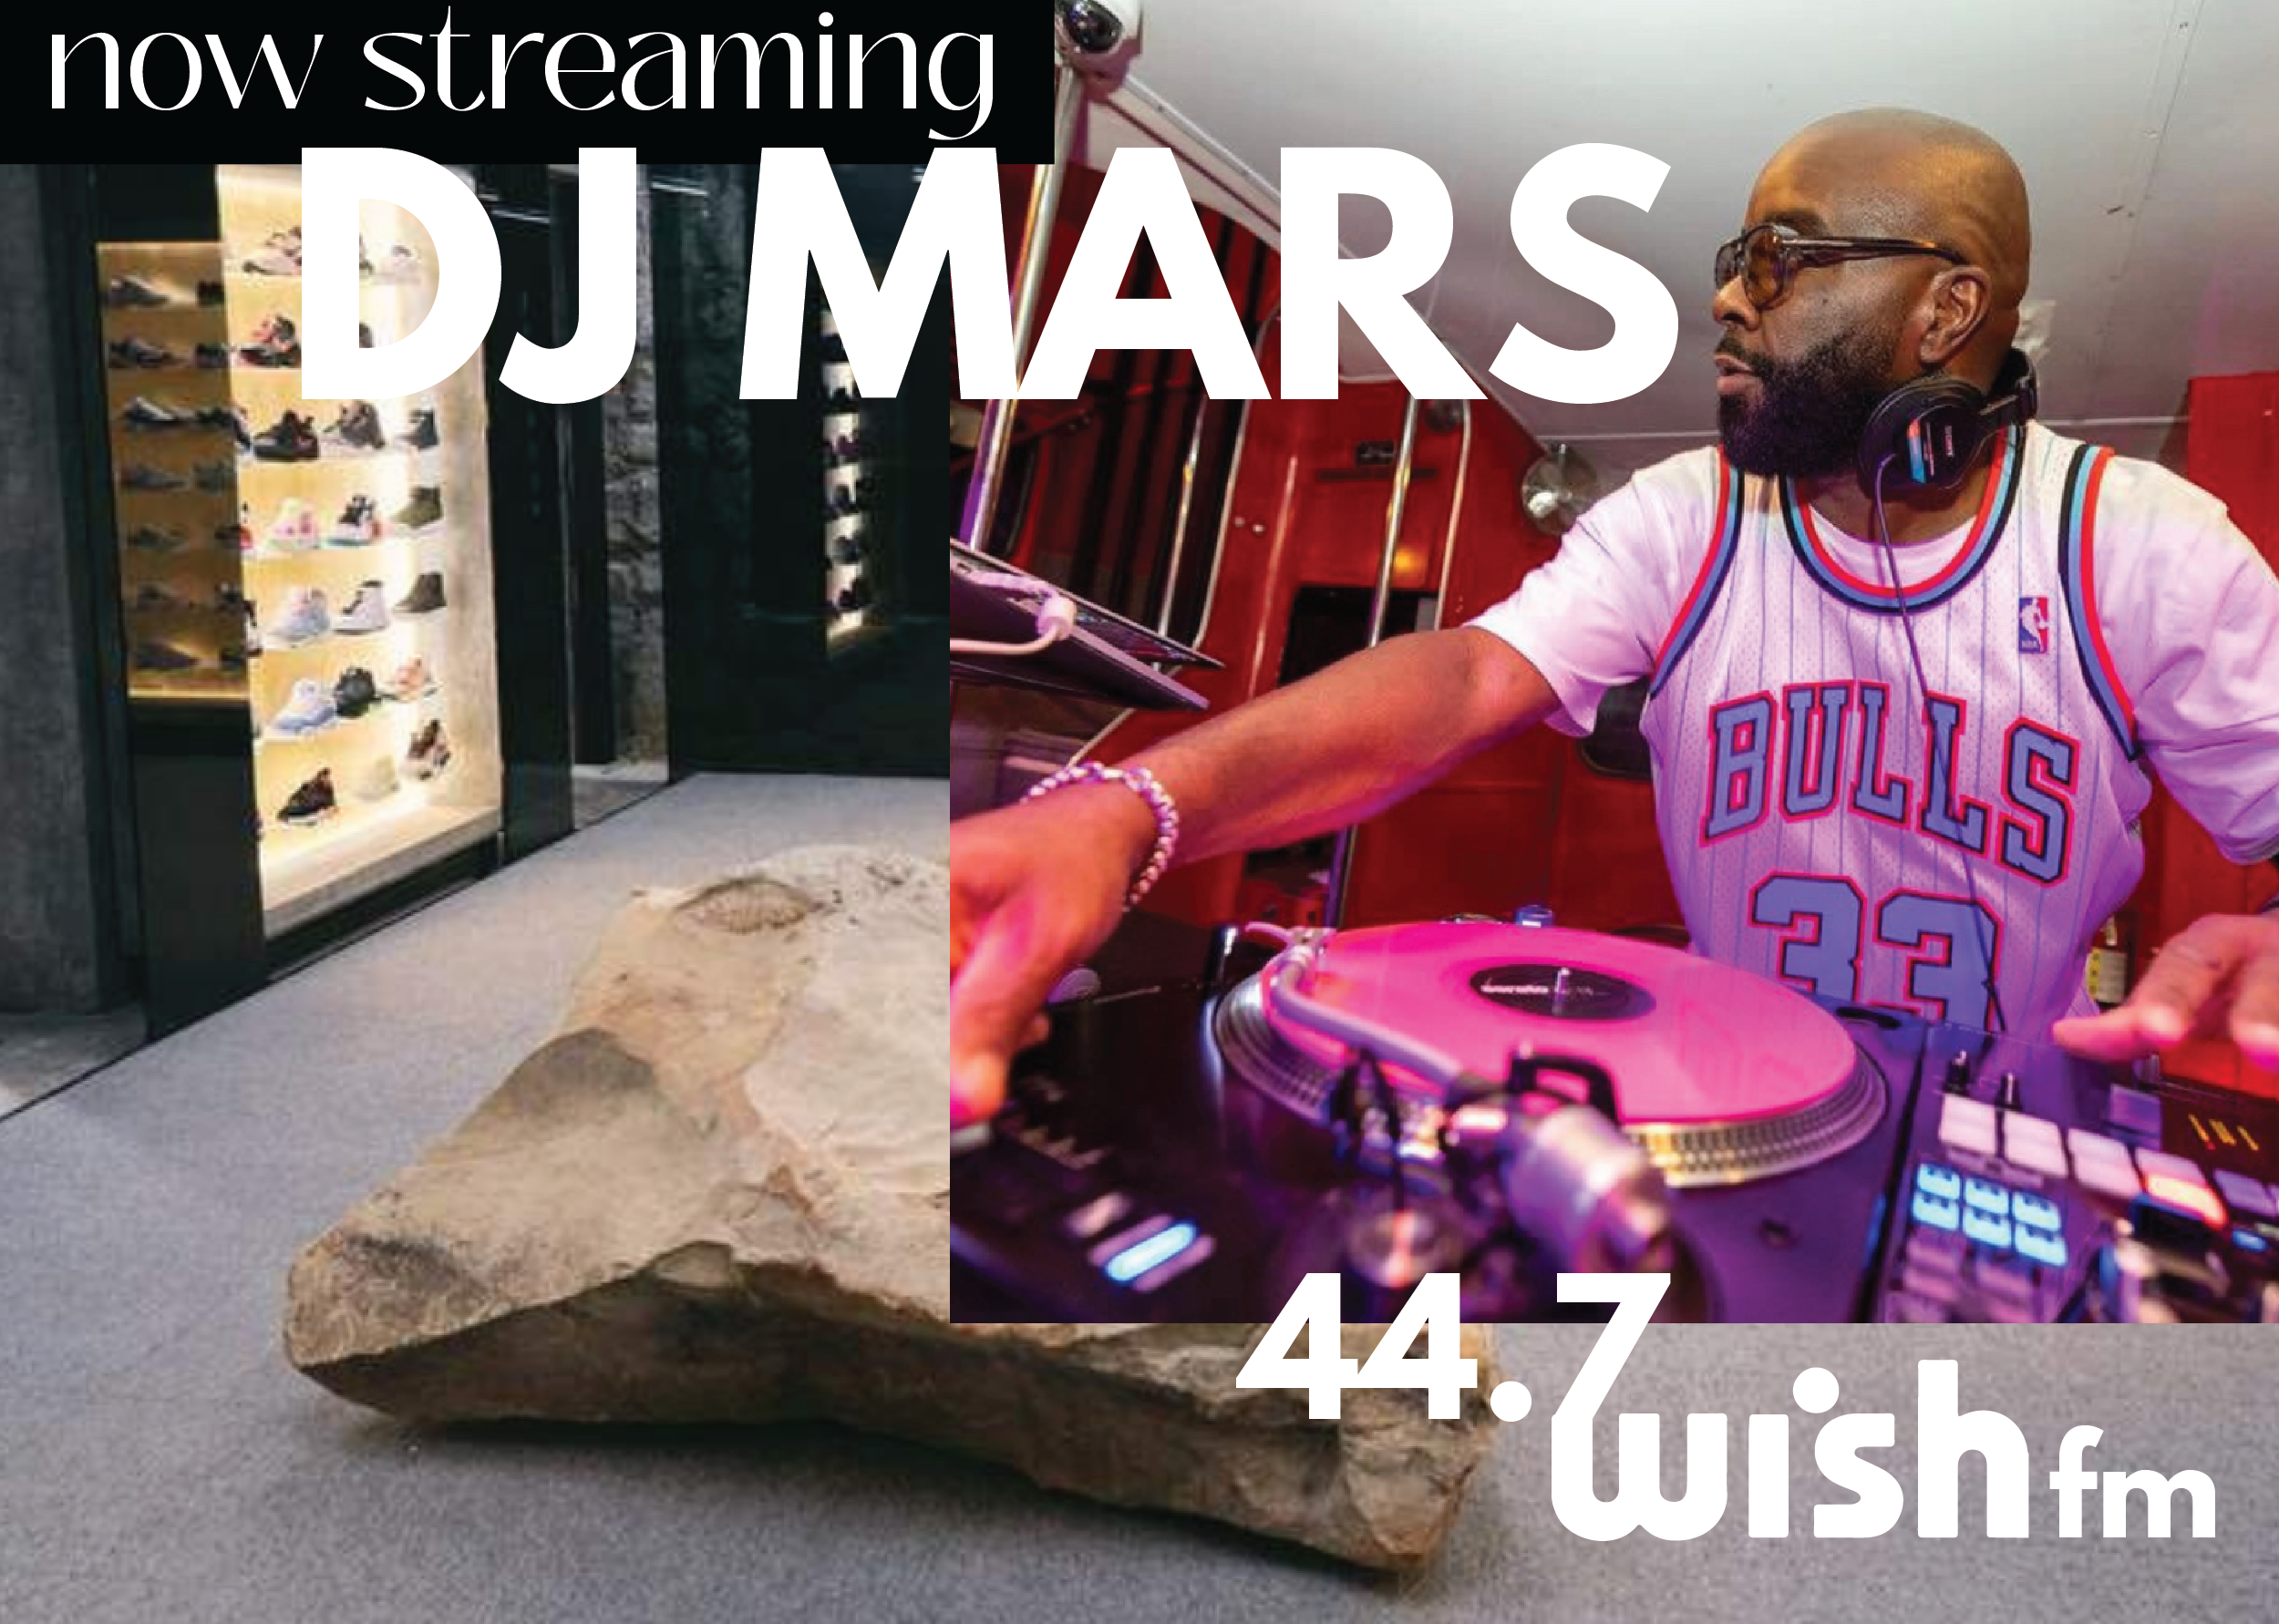 44.7 Wish FM: DJ Mars